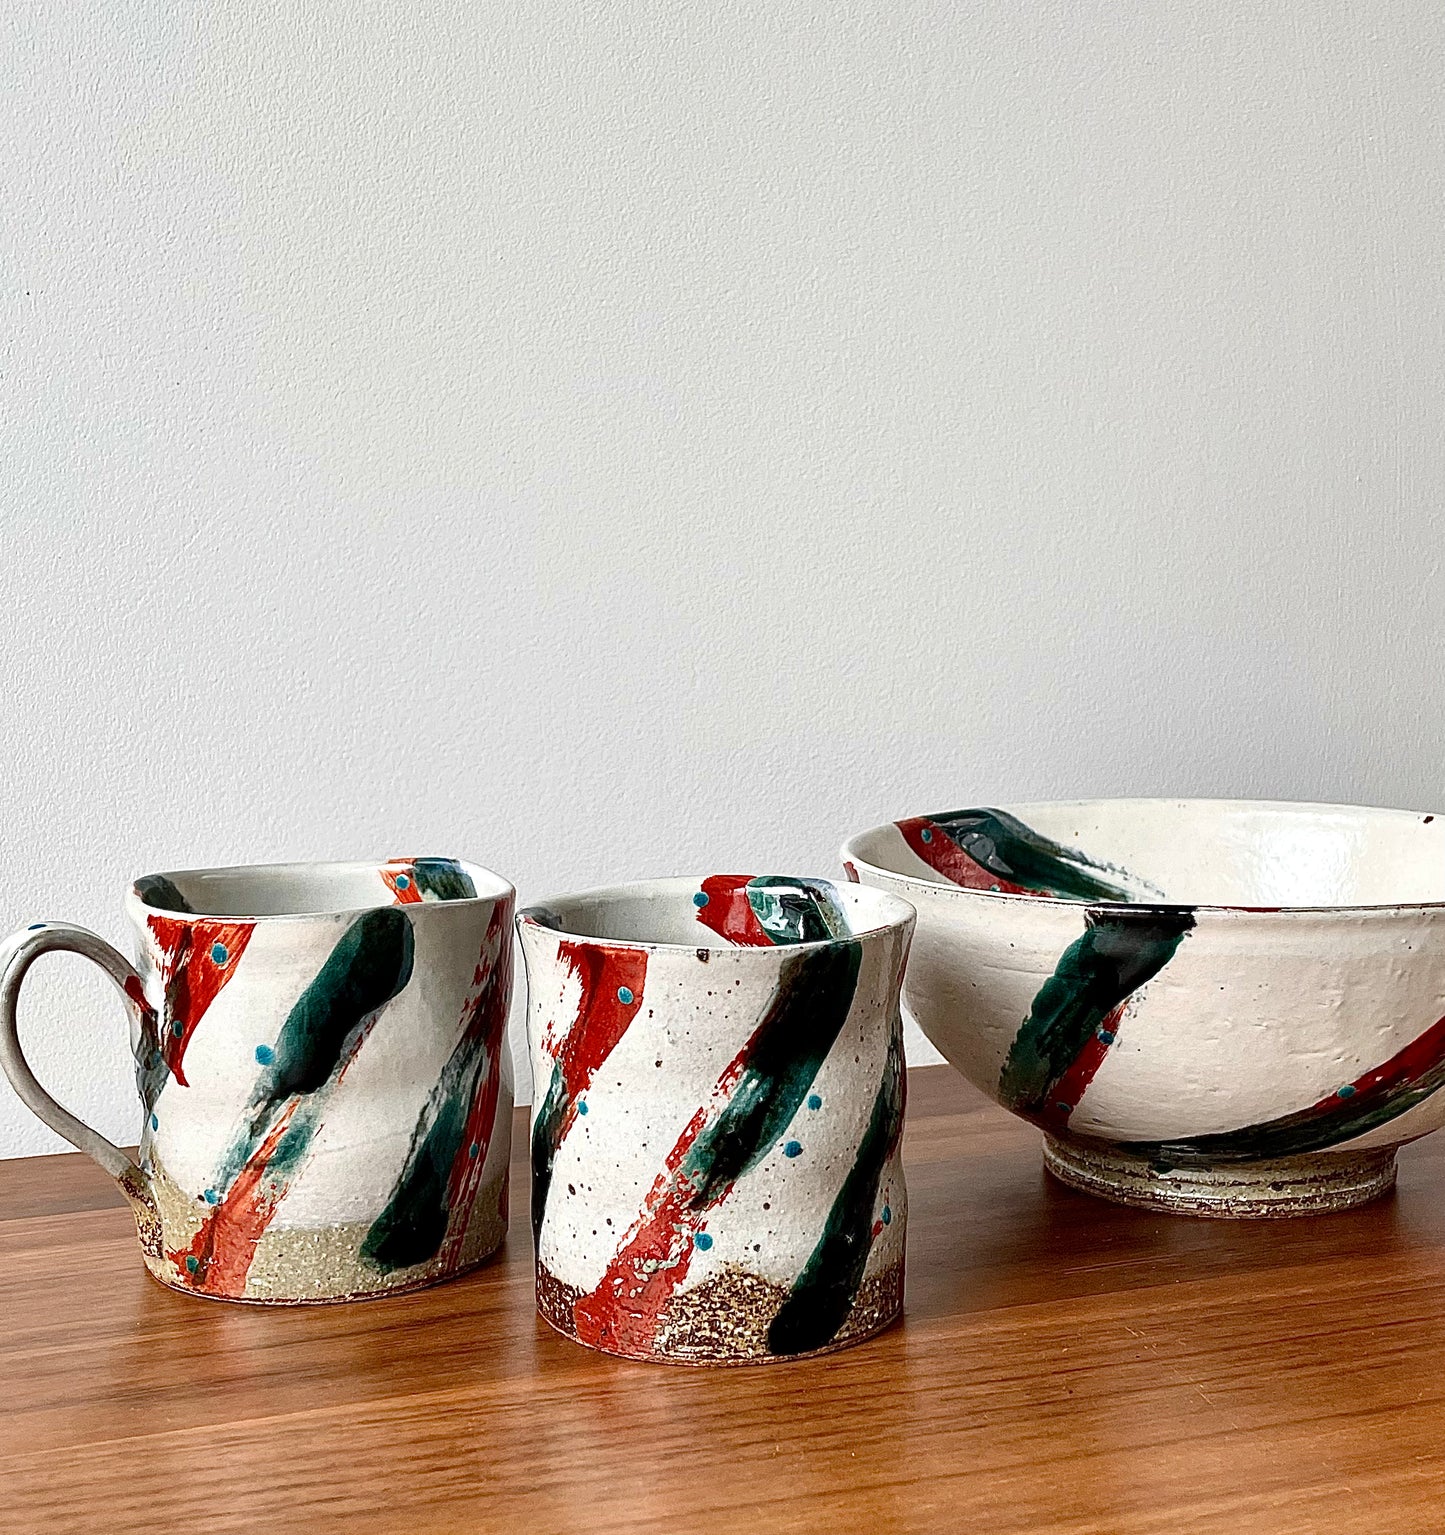 Mug with red and dark green pattern - 虚空藏窑 色绘刷毛姆